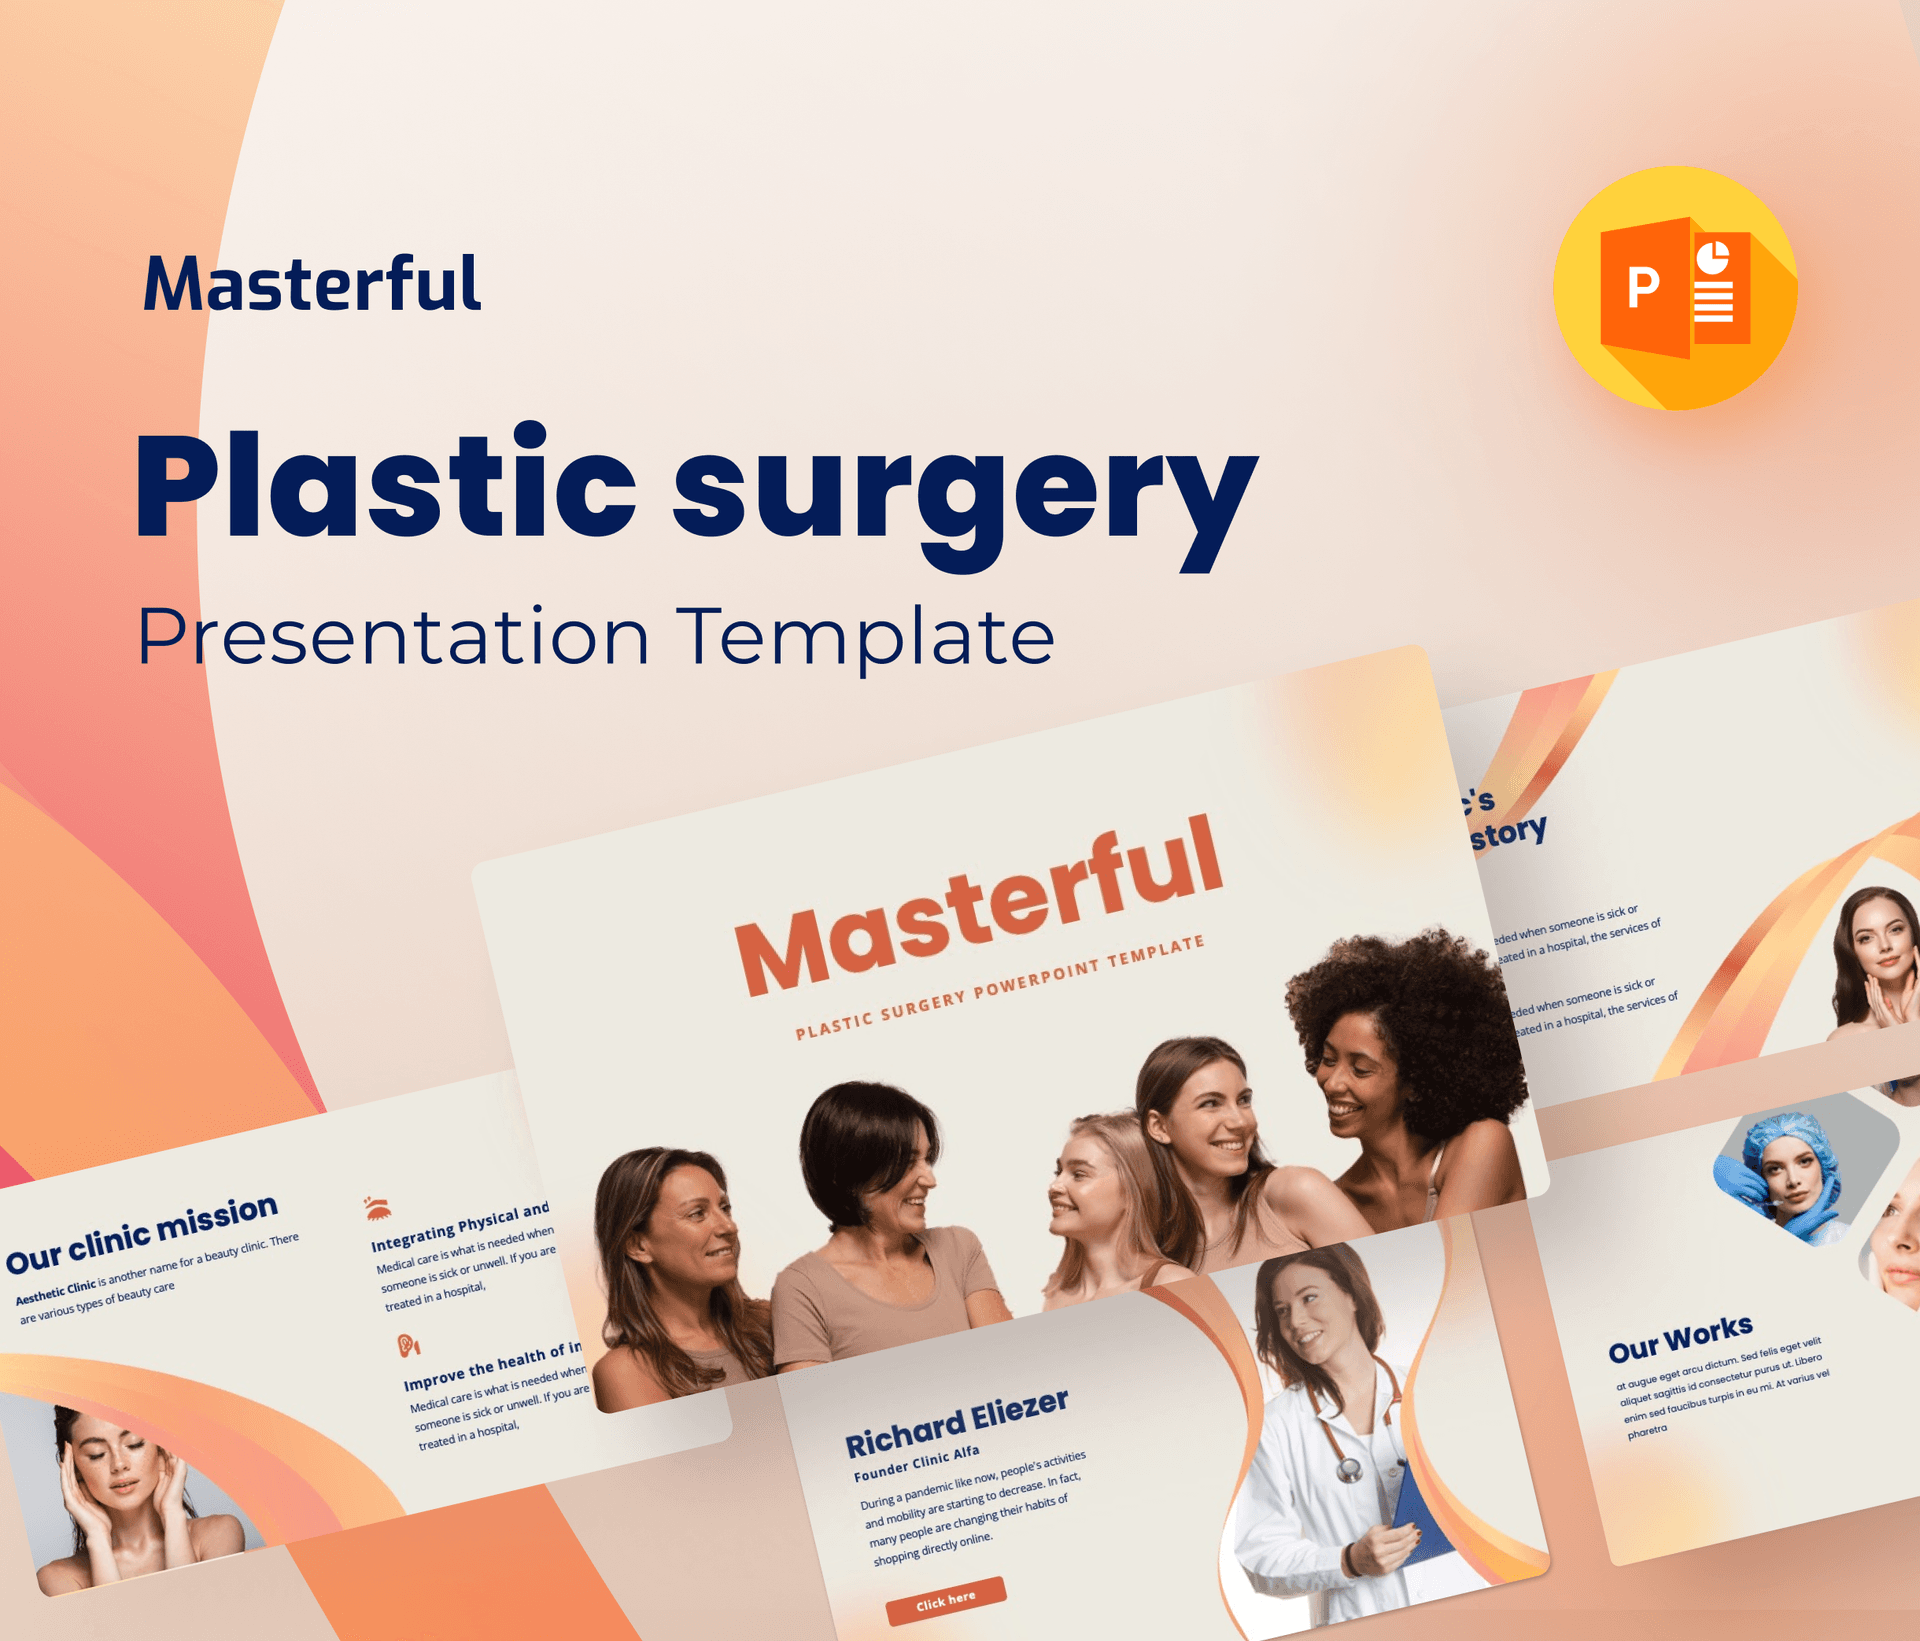 Masterful - Plastic Surgery Presentation Template